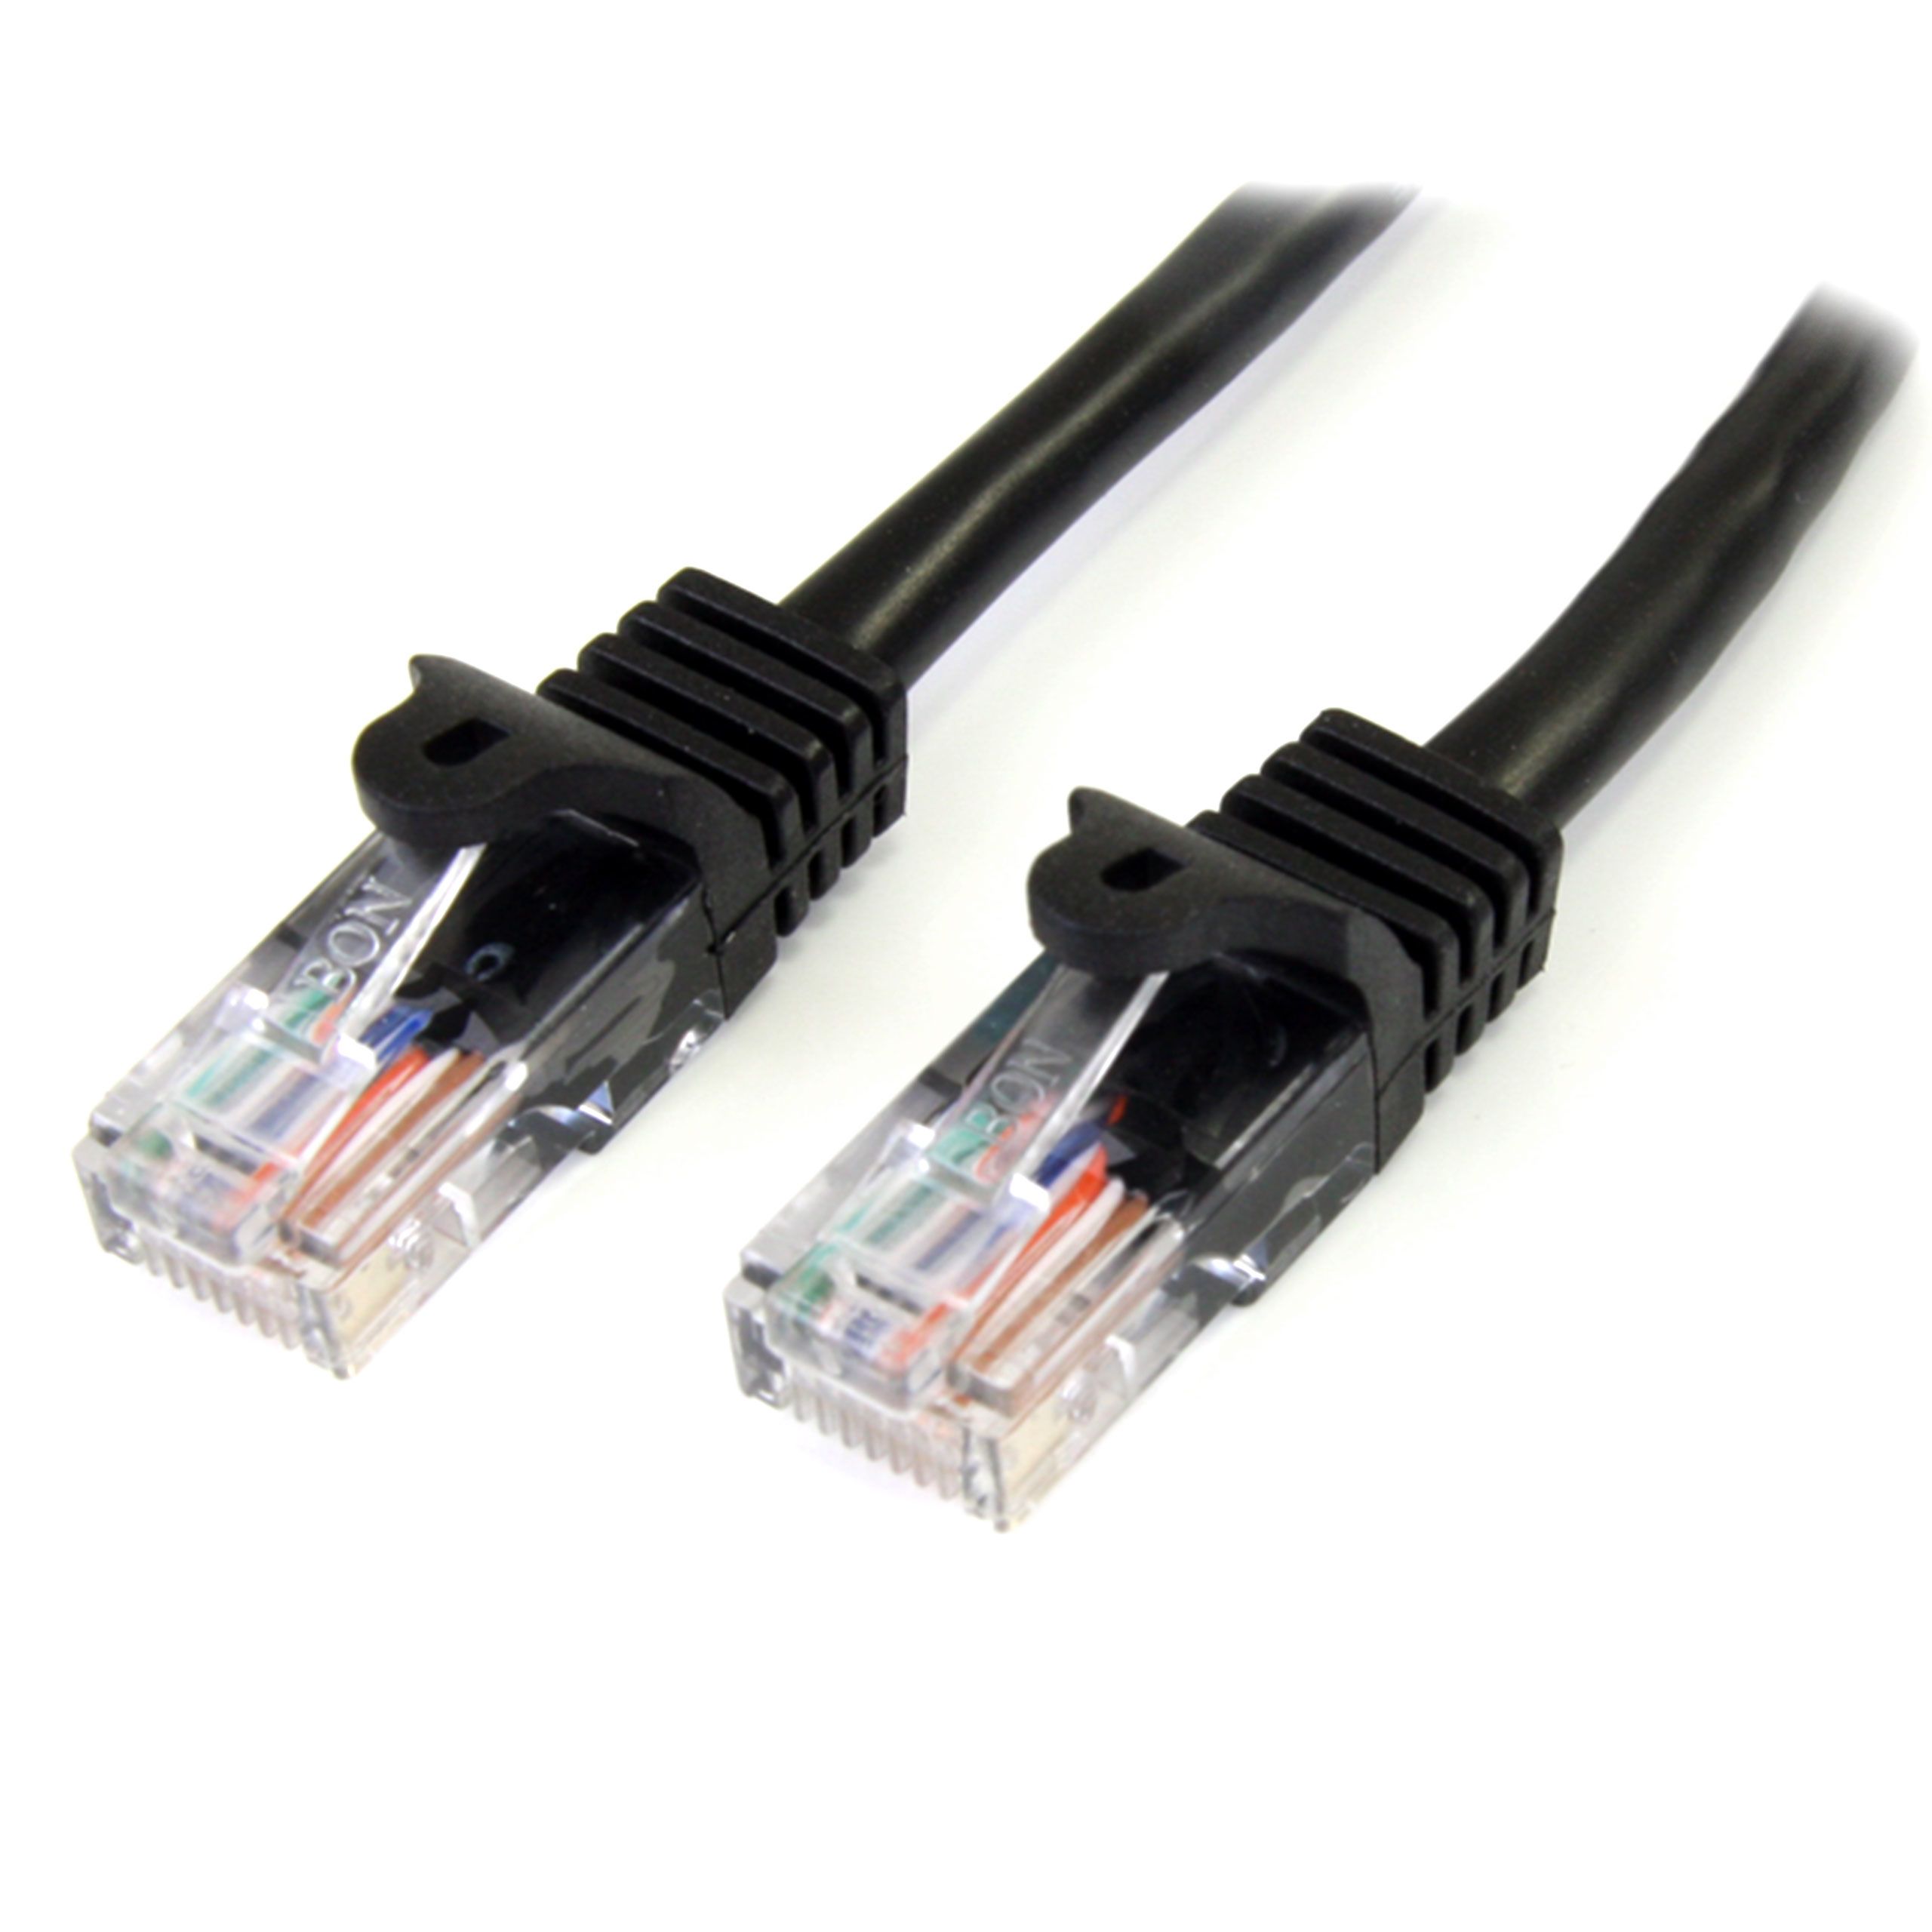 StarTech.com Cat5e Ethernet Cable, RJ45 to RJ45, U/UTP Shield, Black PVC Sheath, 1m